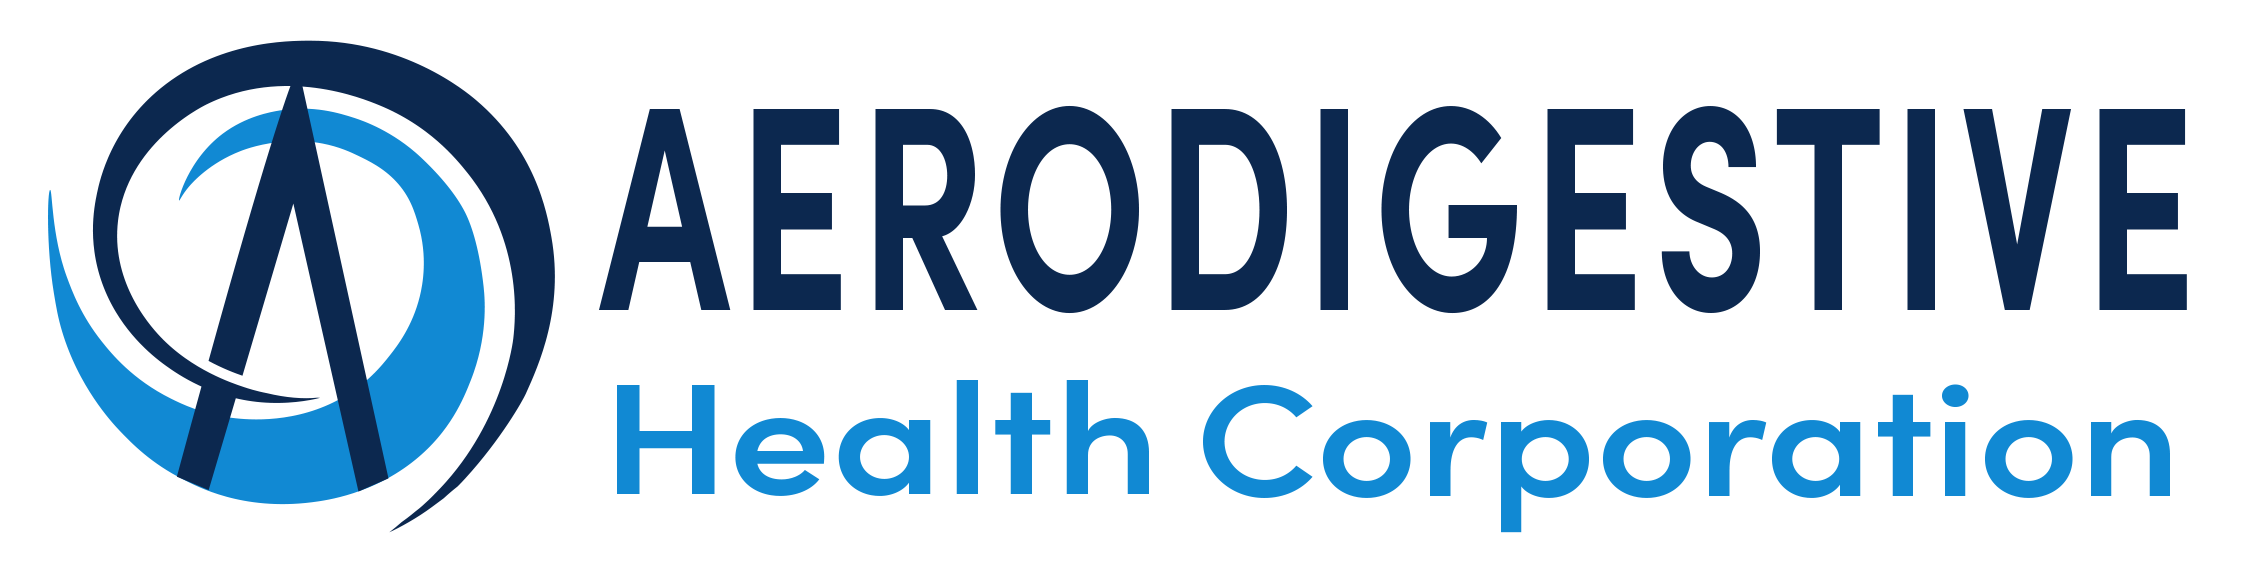 Aerodigestive Health Corporation